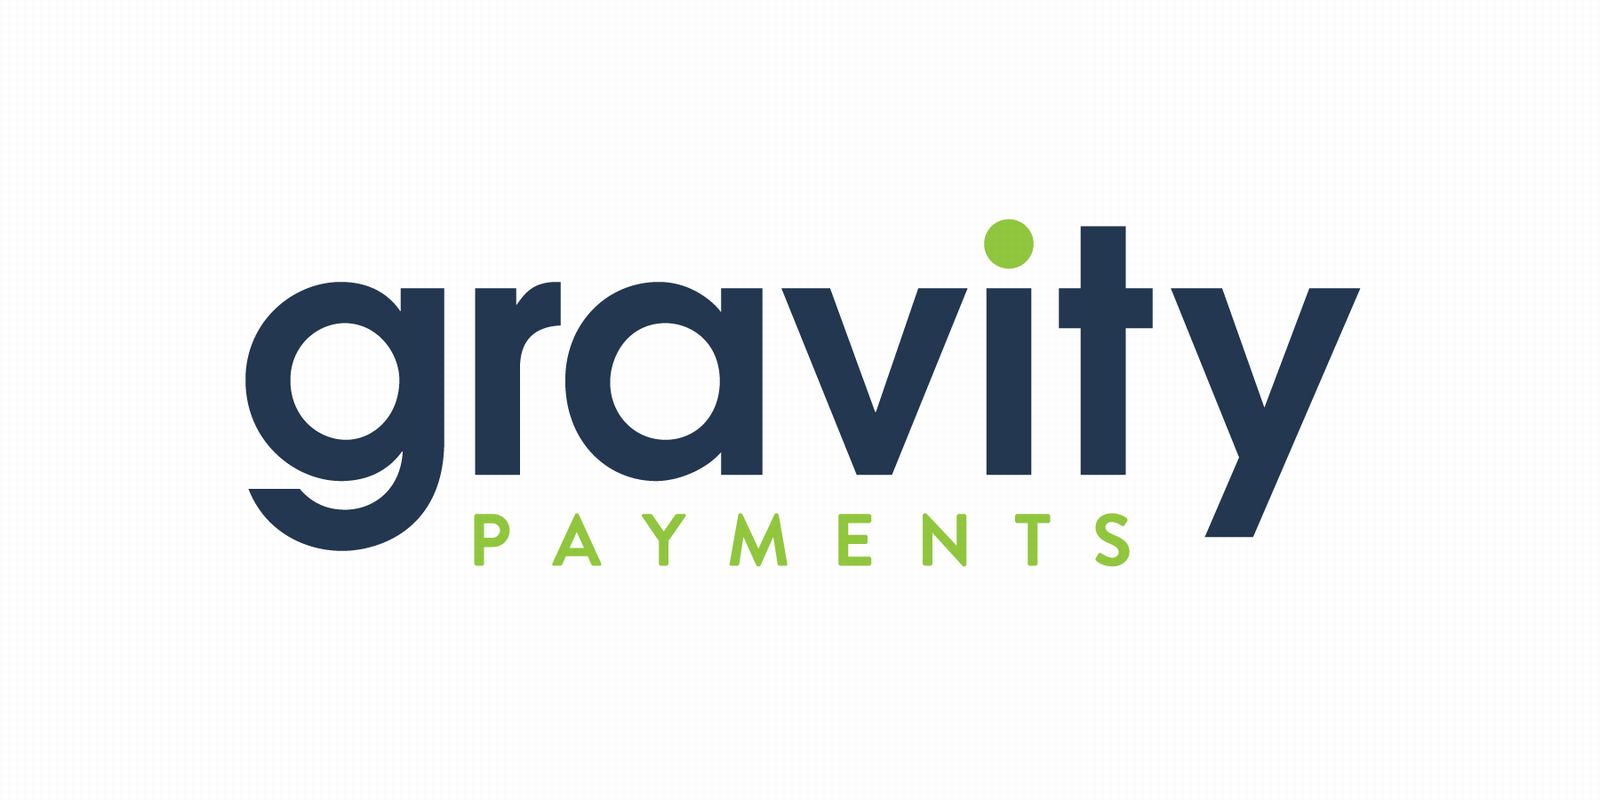 Gravity-payments-logo.jpg